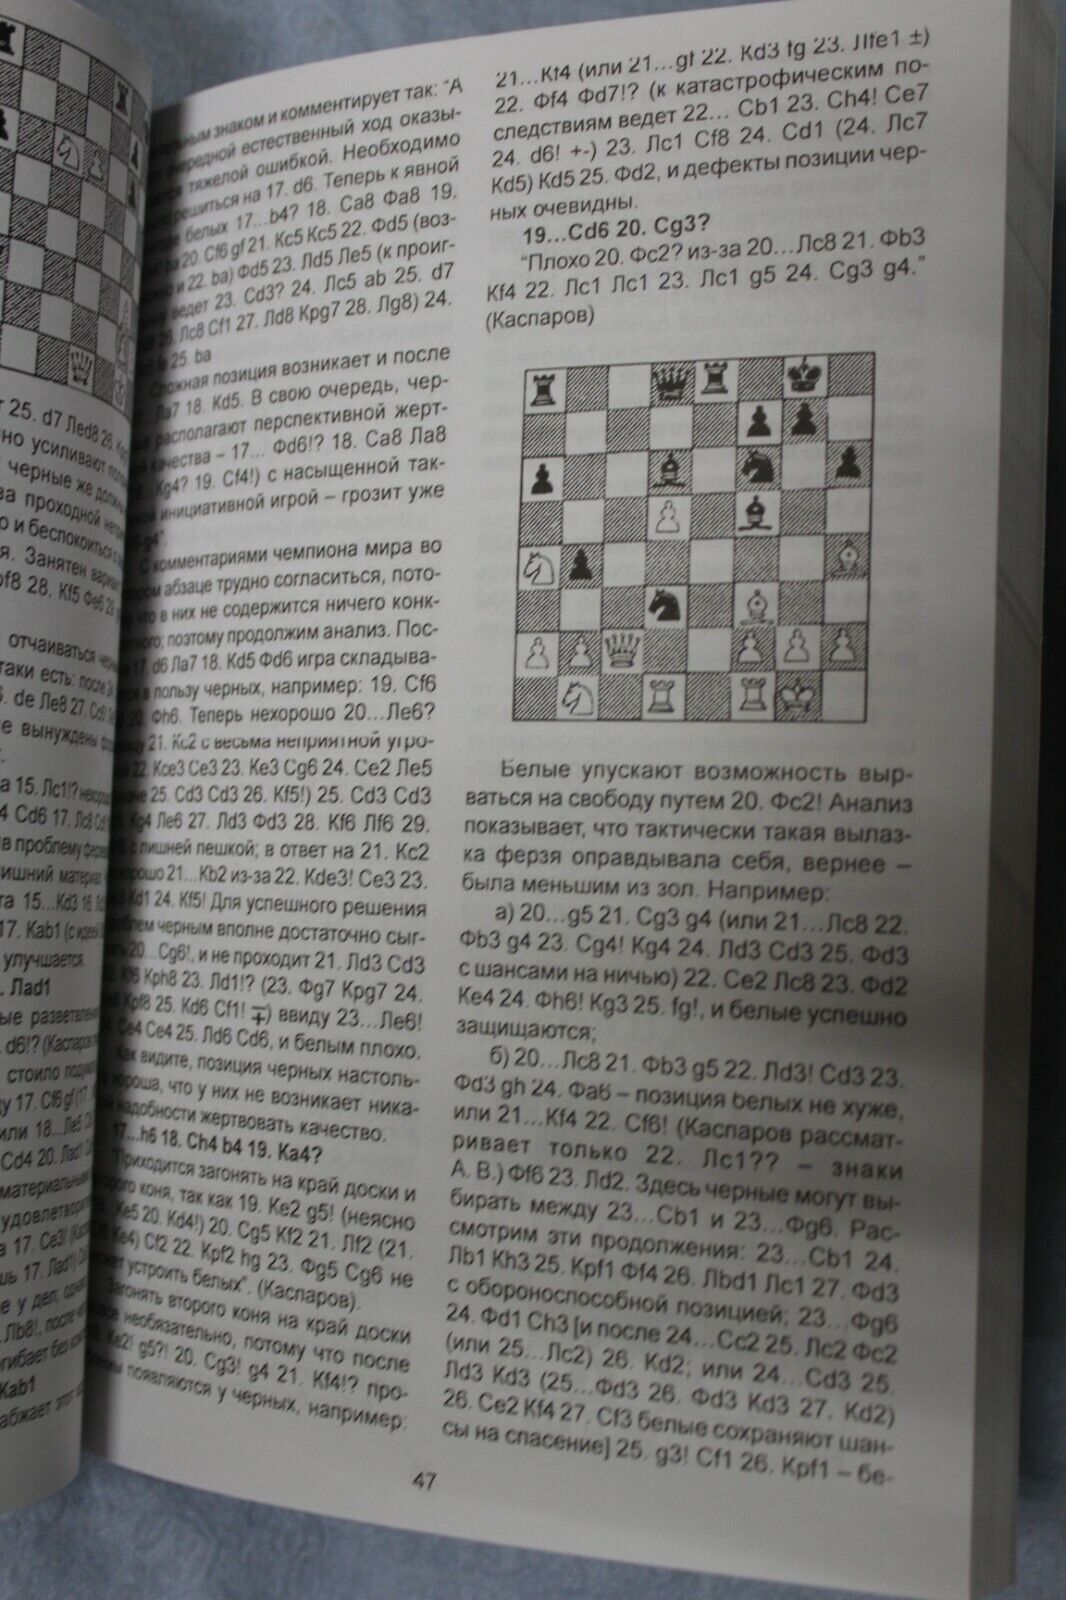 11516.Russian Chess Book: Grandmaster Secrets, 2000 A. Volchok